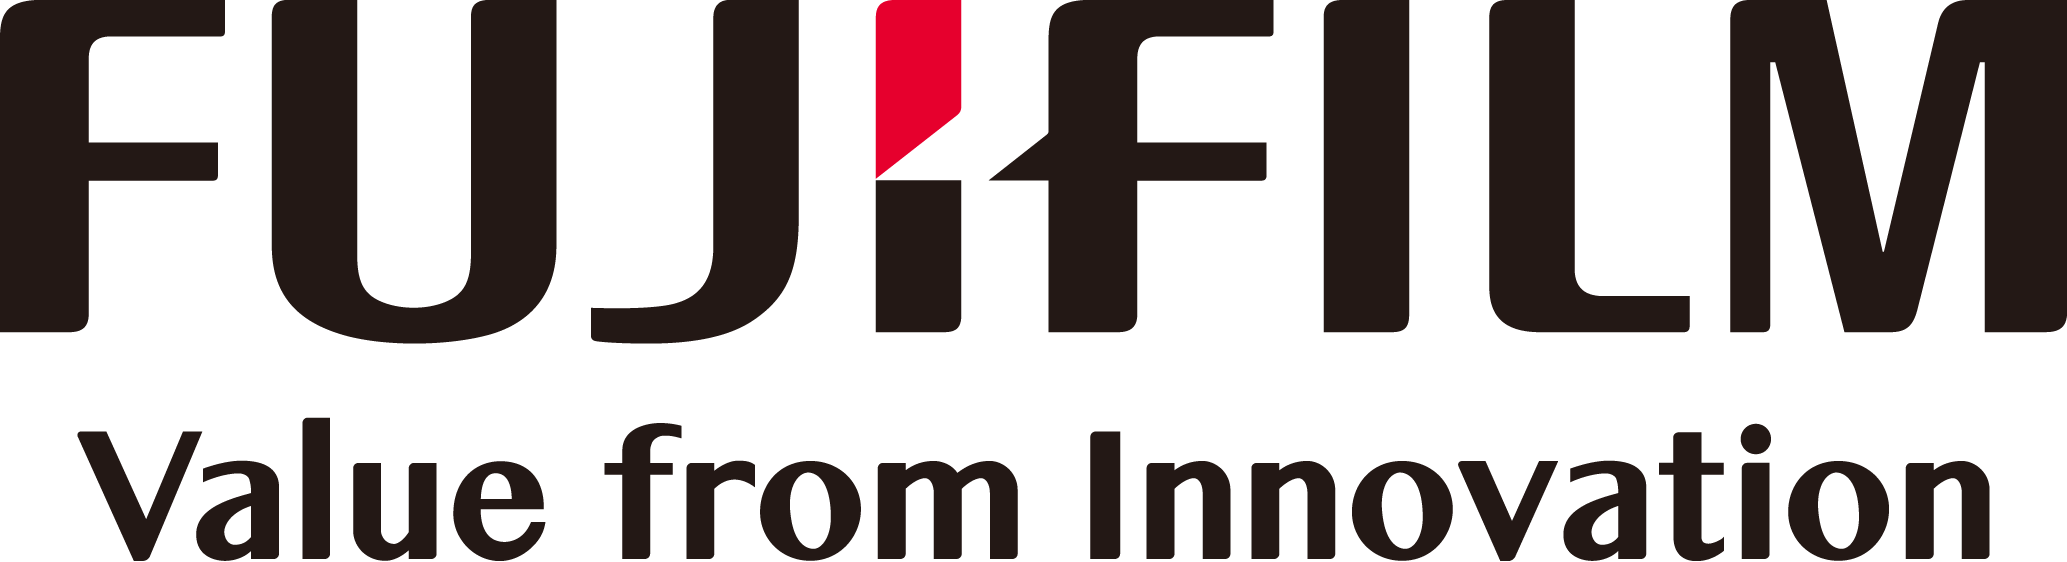 Fujifilm Vietnam